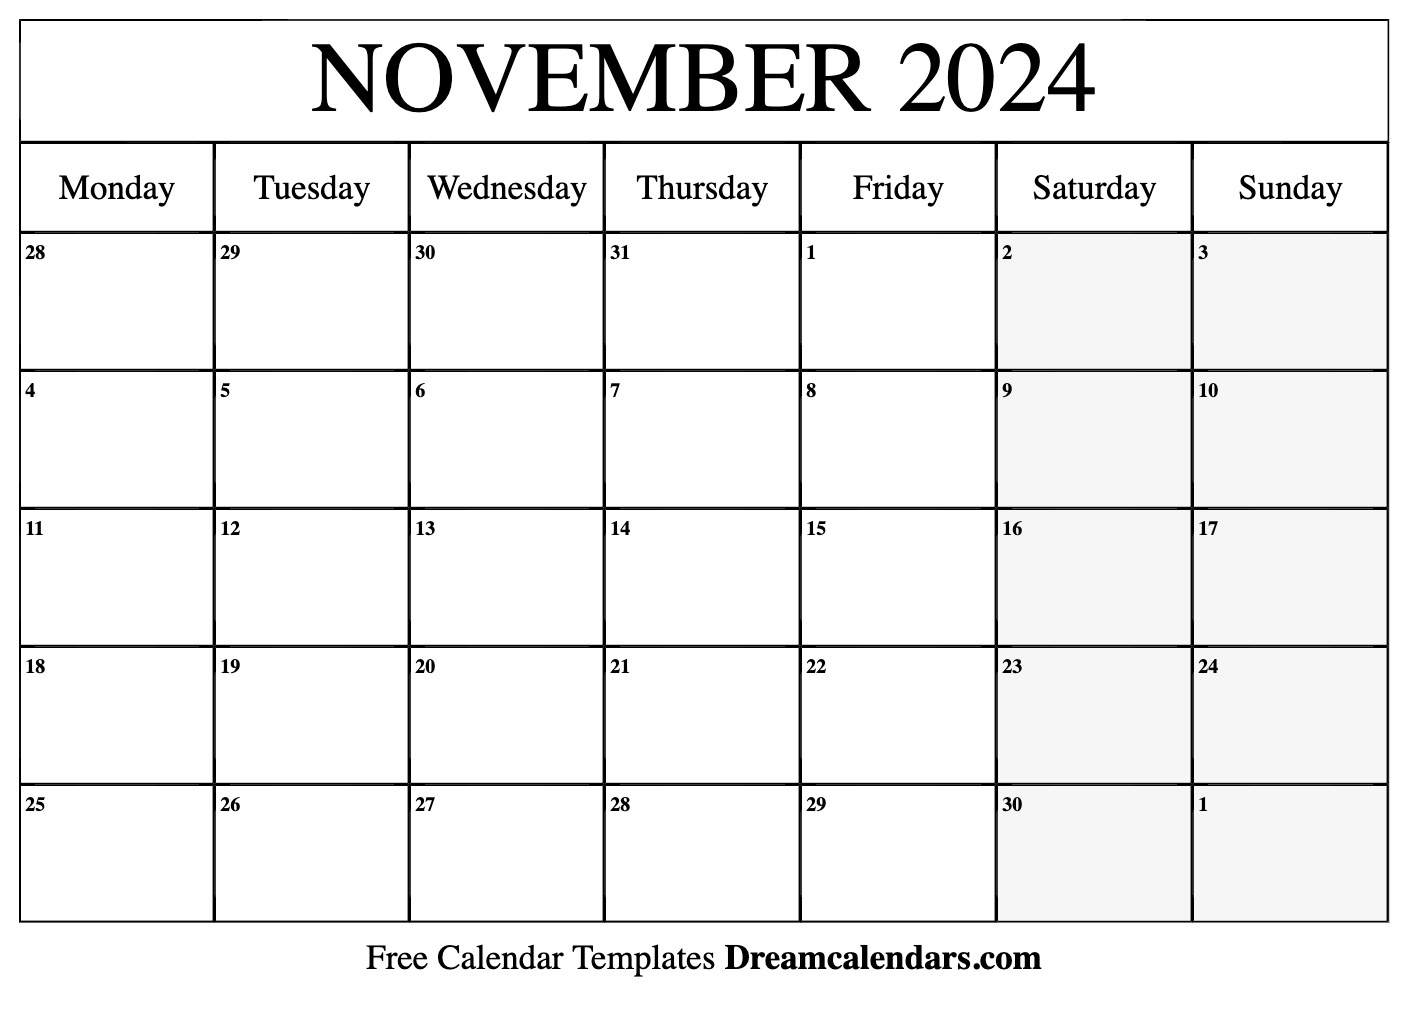 November 2024 Calendar | Free Blank Printable With Holidays intended for Free Printable Blank Calendar 2024 November